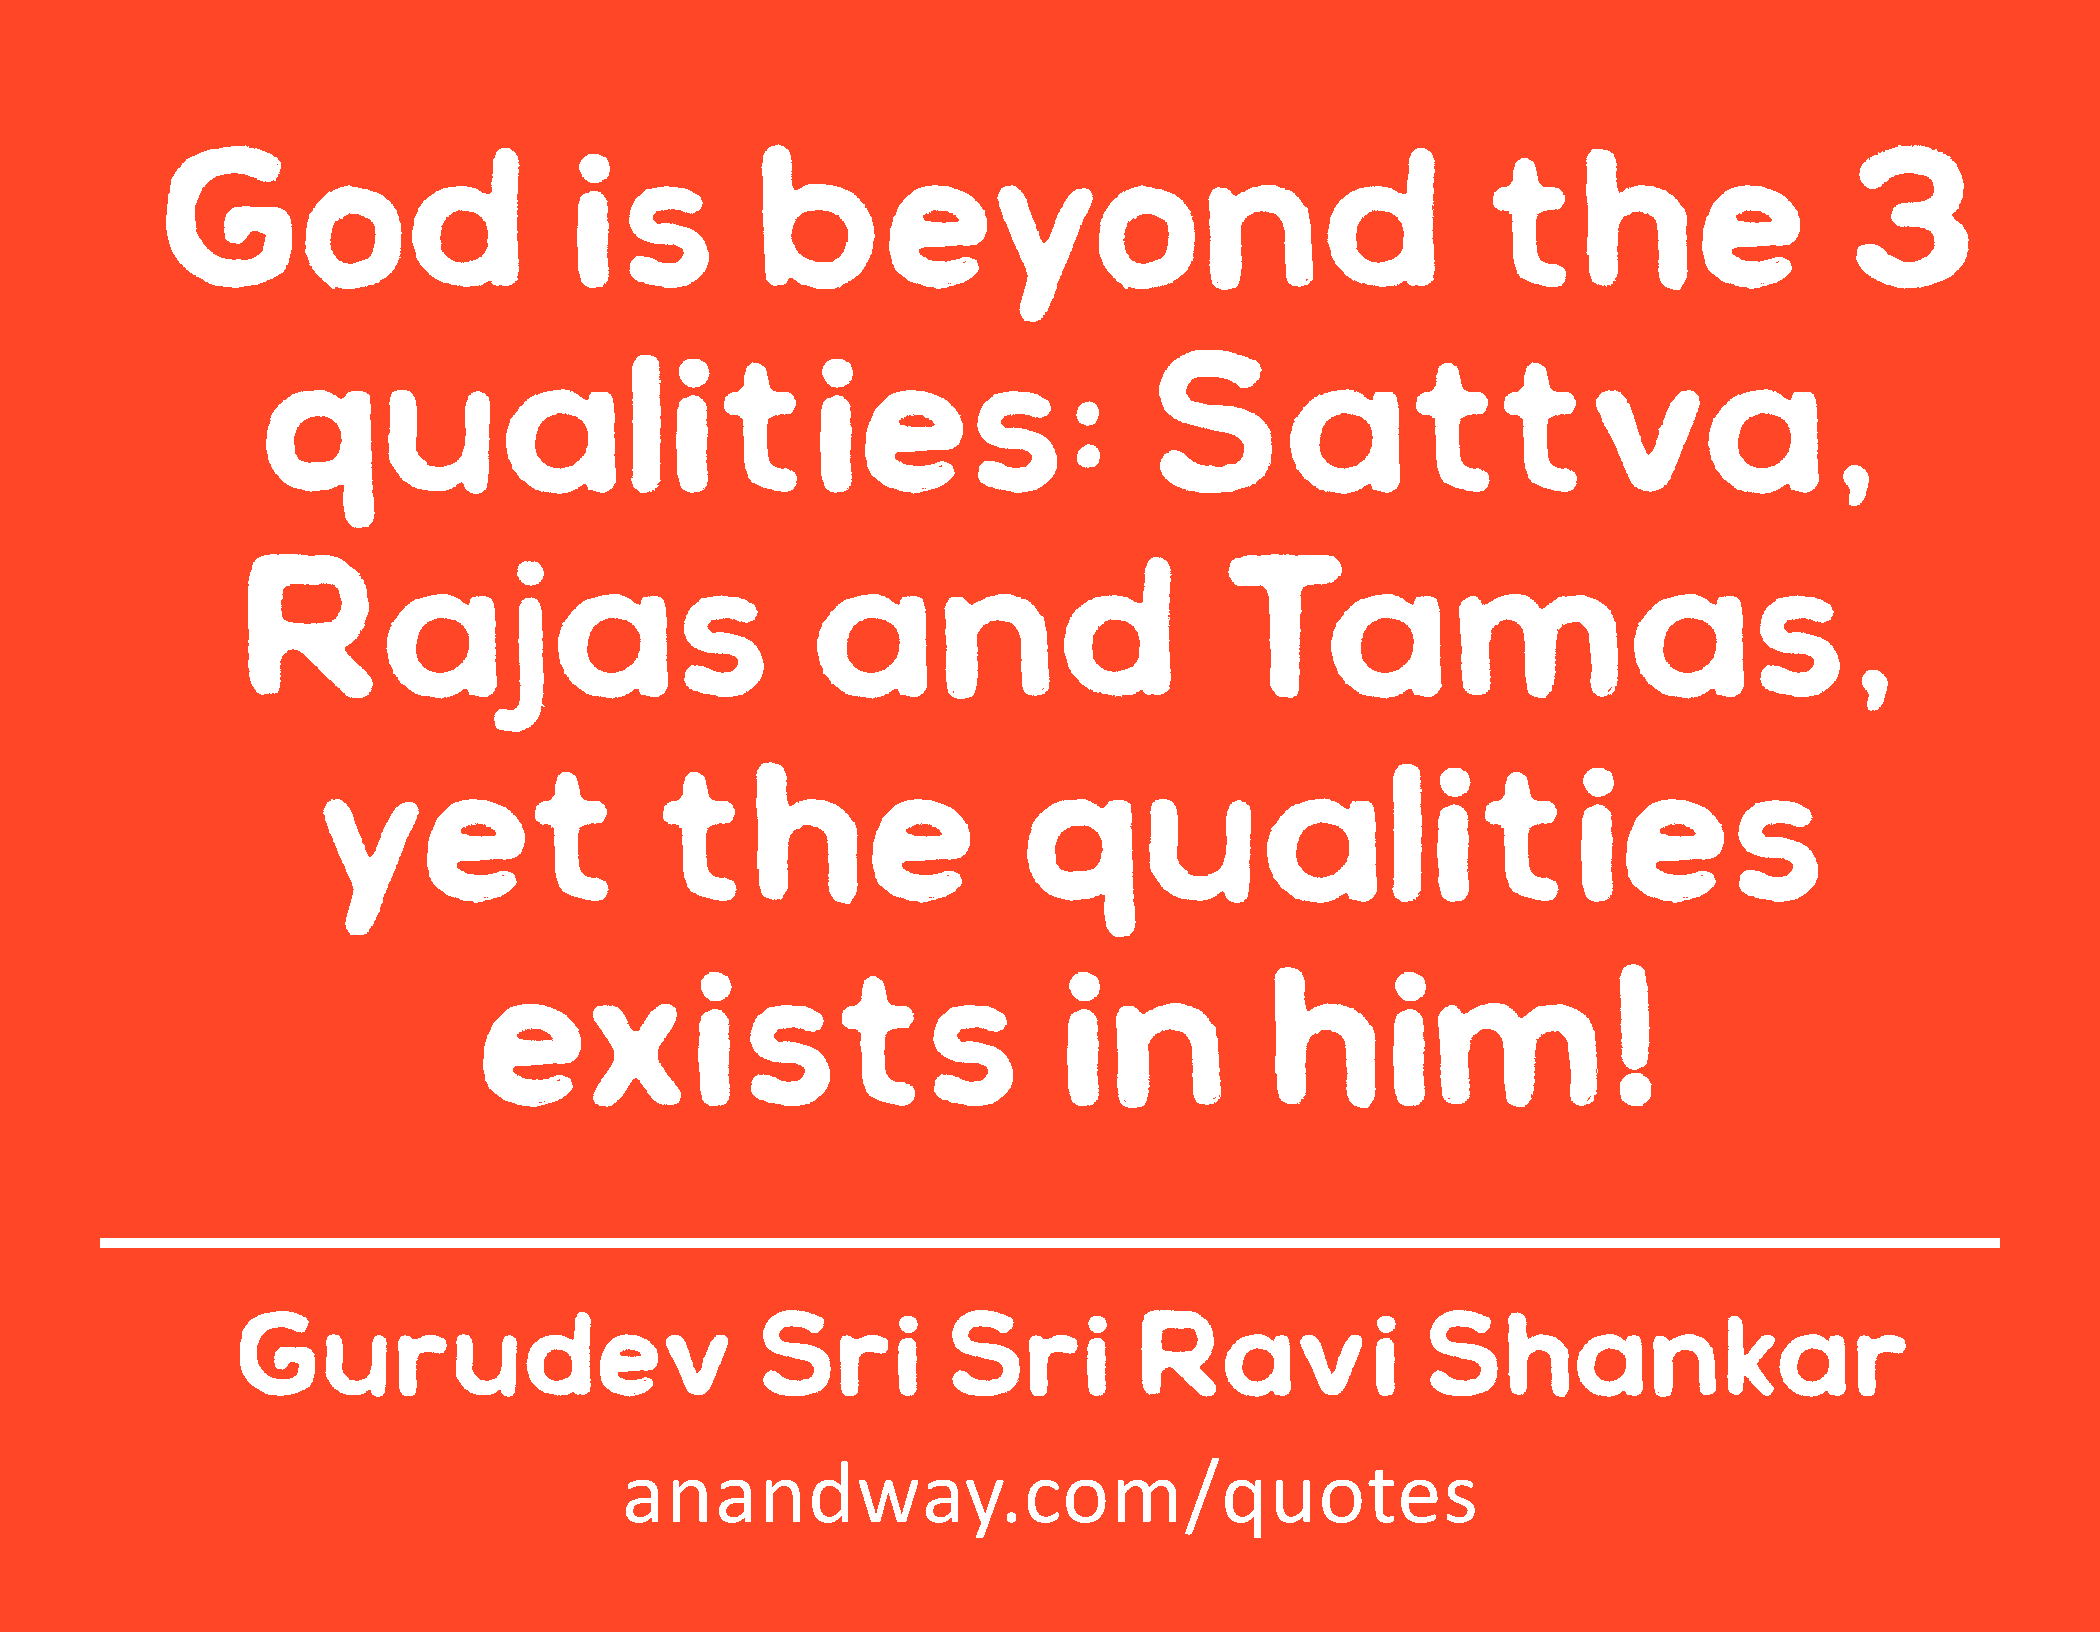 God is beyond the 3 qualities: Sattva, Rajas and Tamas, yet the qualities exists in him! 
 -Gurudev Sri Sri Ravi Shankar